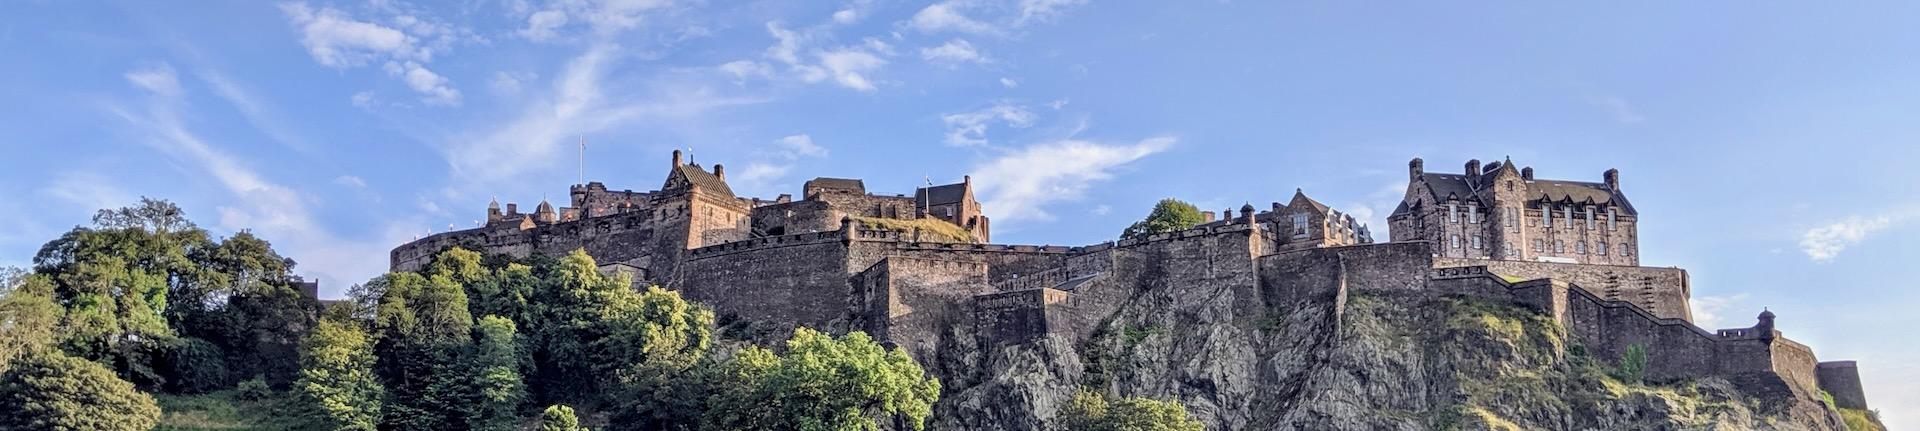 https://www.selectscotlandtours.com/web/datafiles/uploaded/cms_banner/main/main_128_Edinburgh Castle.jpg